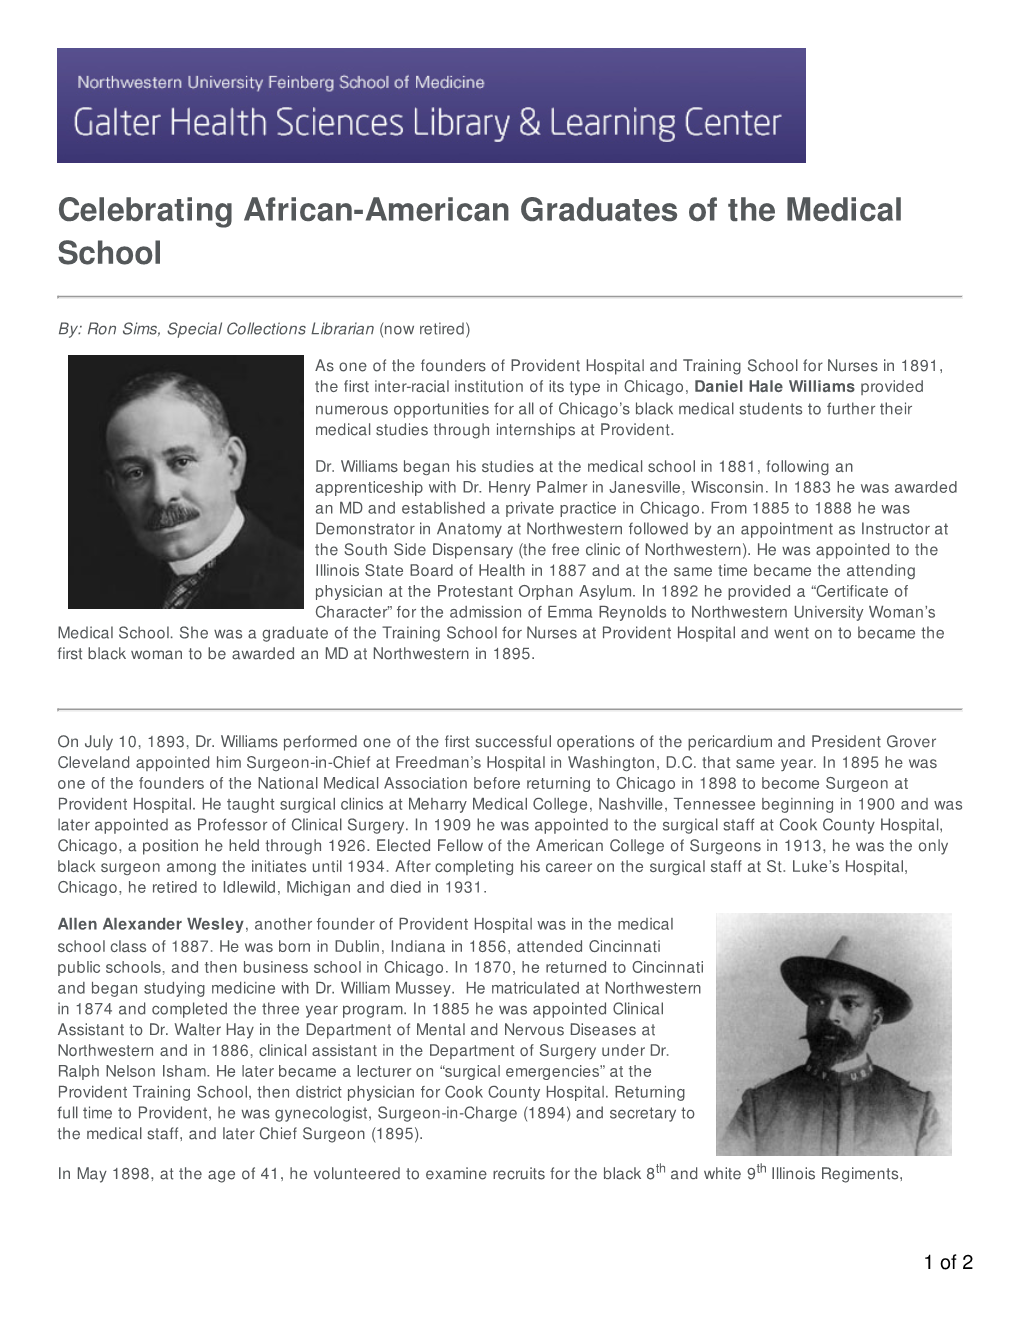 Celebrating African-American Graduates of the Medical School